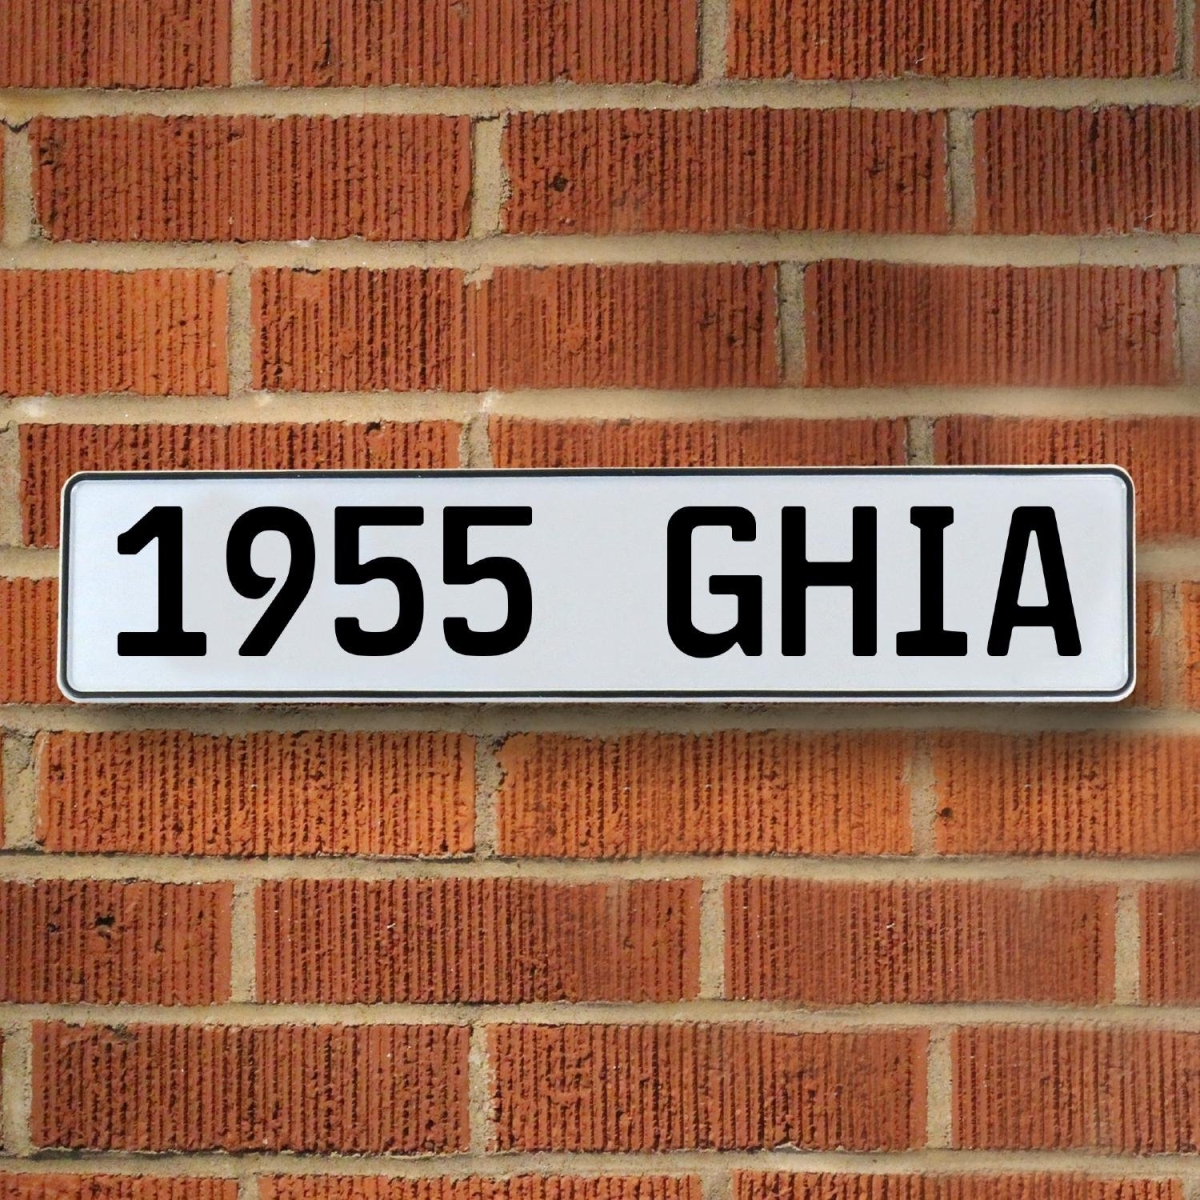 785918 1955 Ghia - White Aluminum Street Sign Mancave Euro Plate Name Door Sign Wall